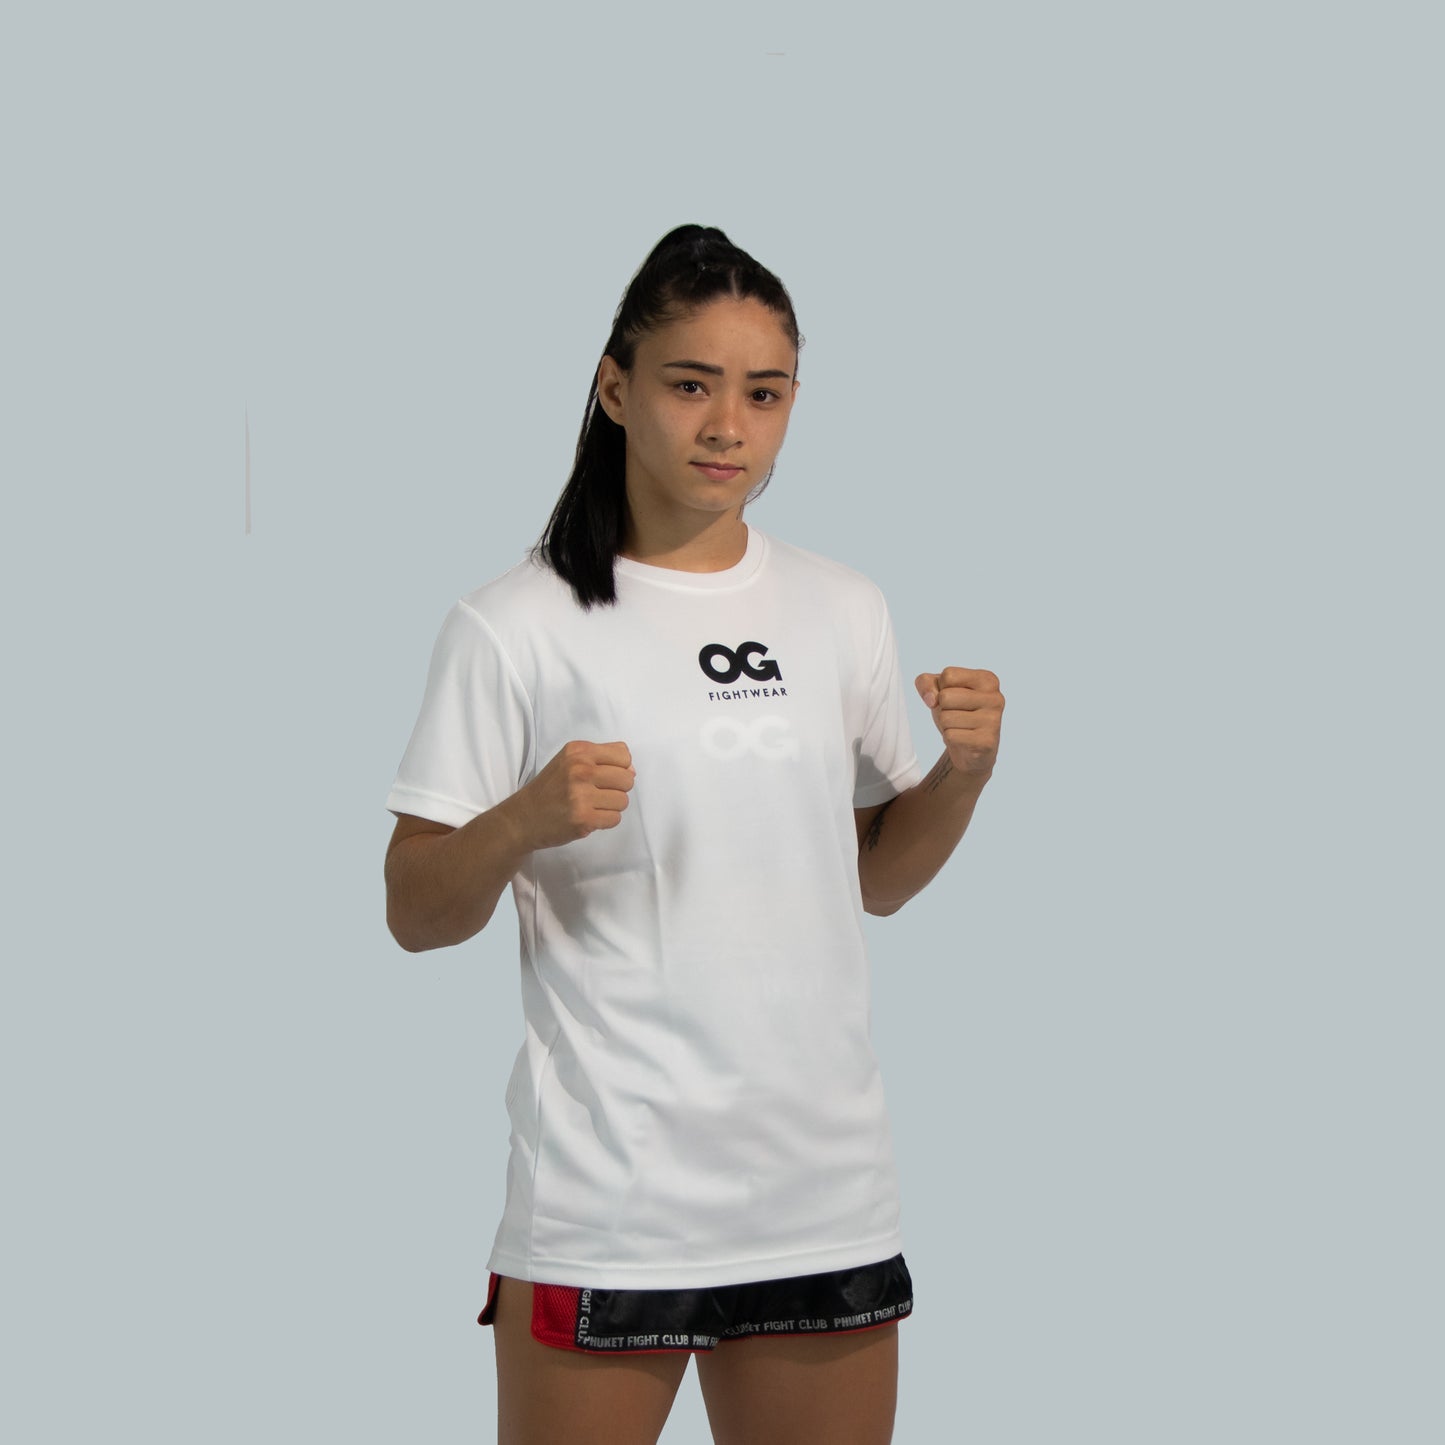 Nxt-Gen Microfiber T-Shirt (White)